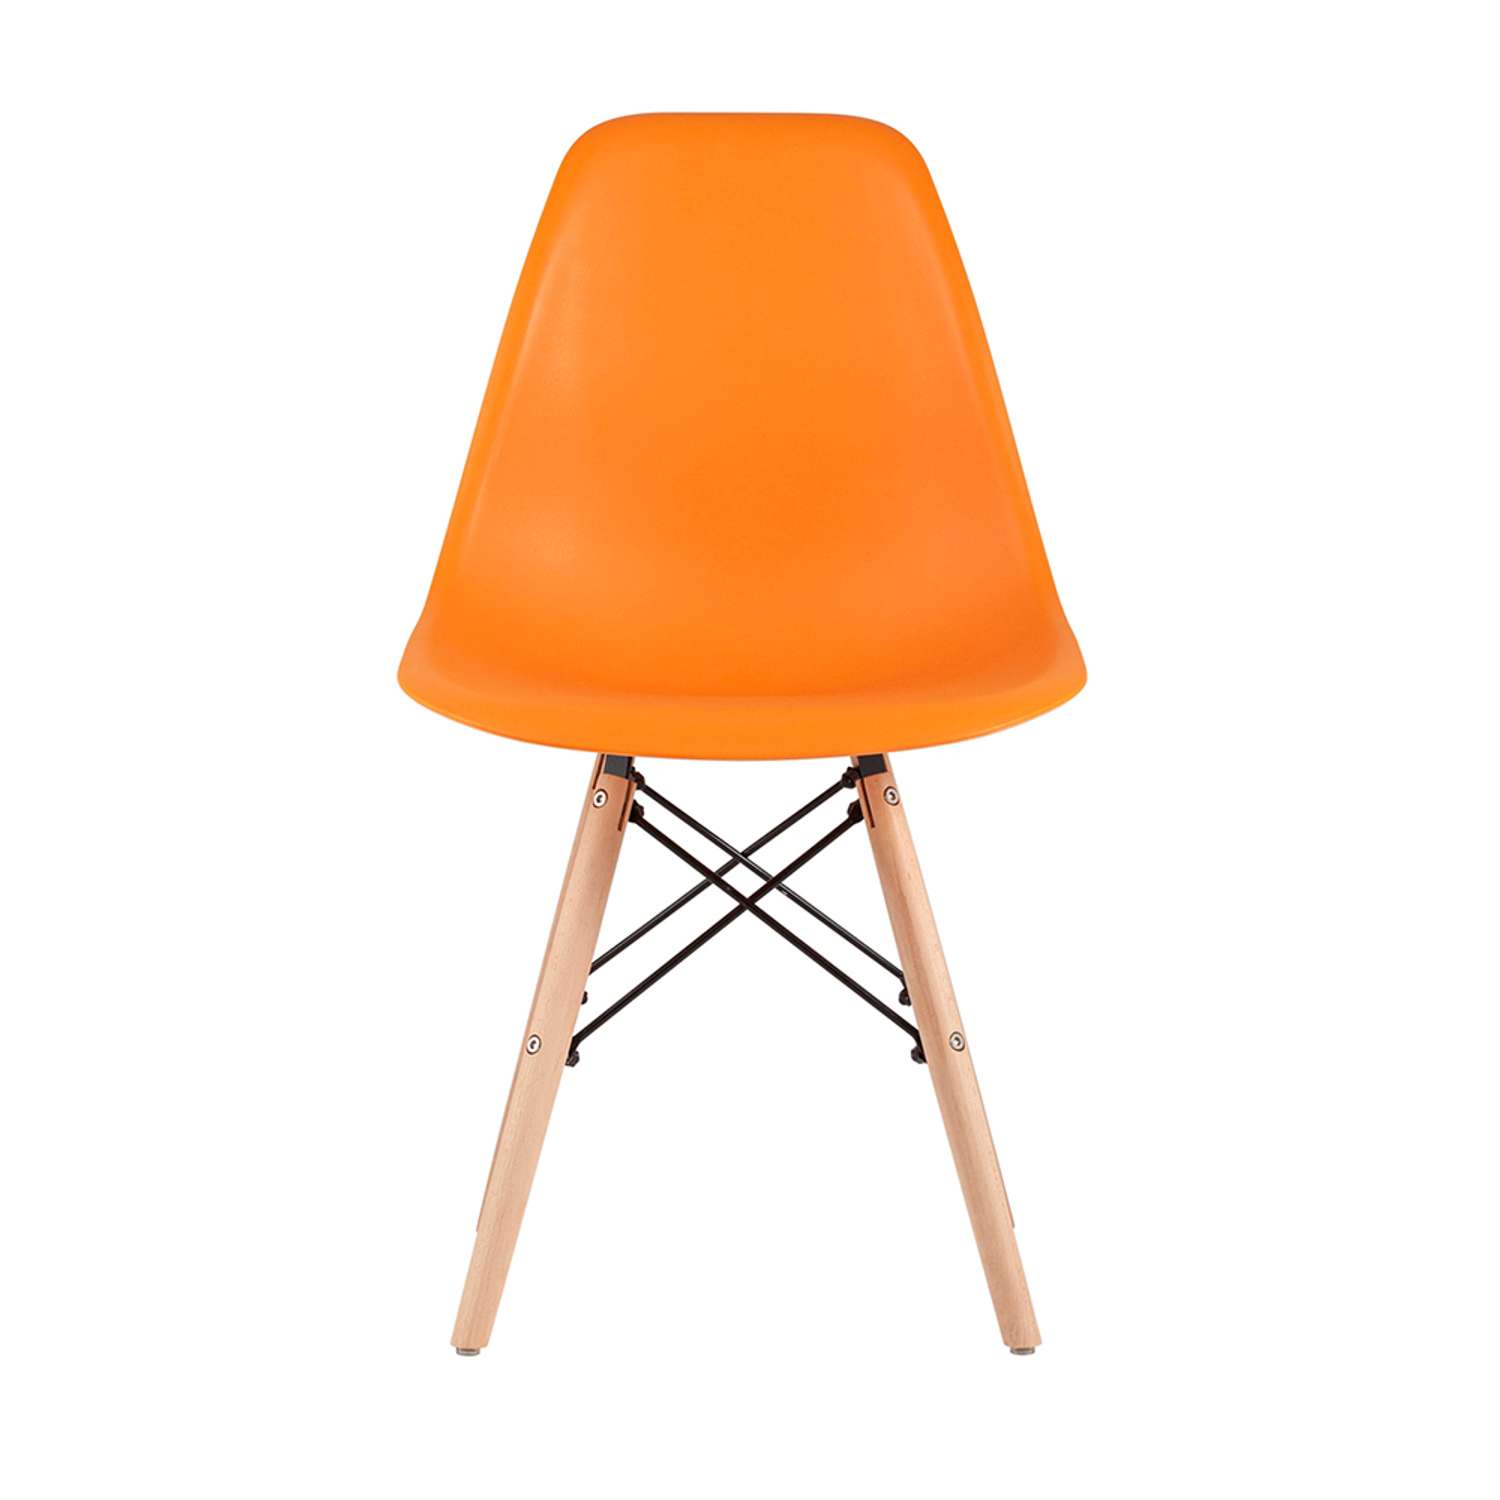 Комплект стульев Stool Group DSW Style оранжевый - фото 7